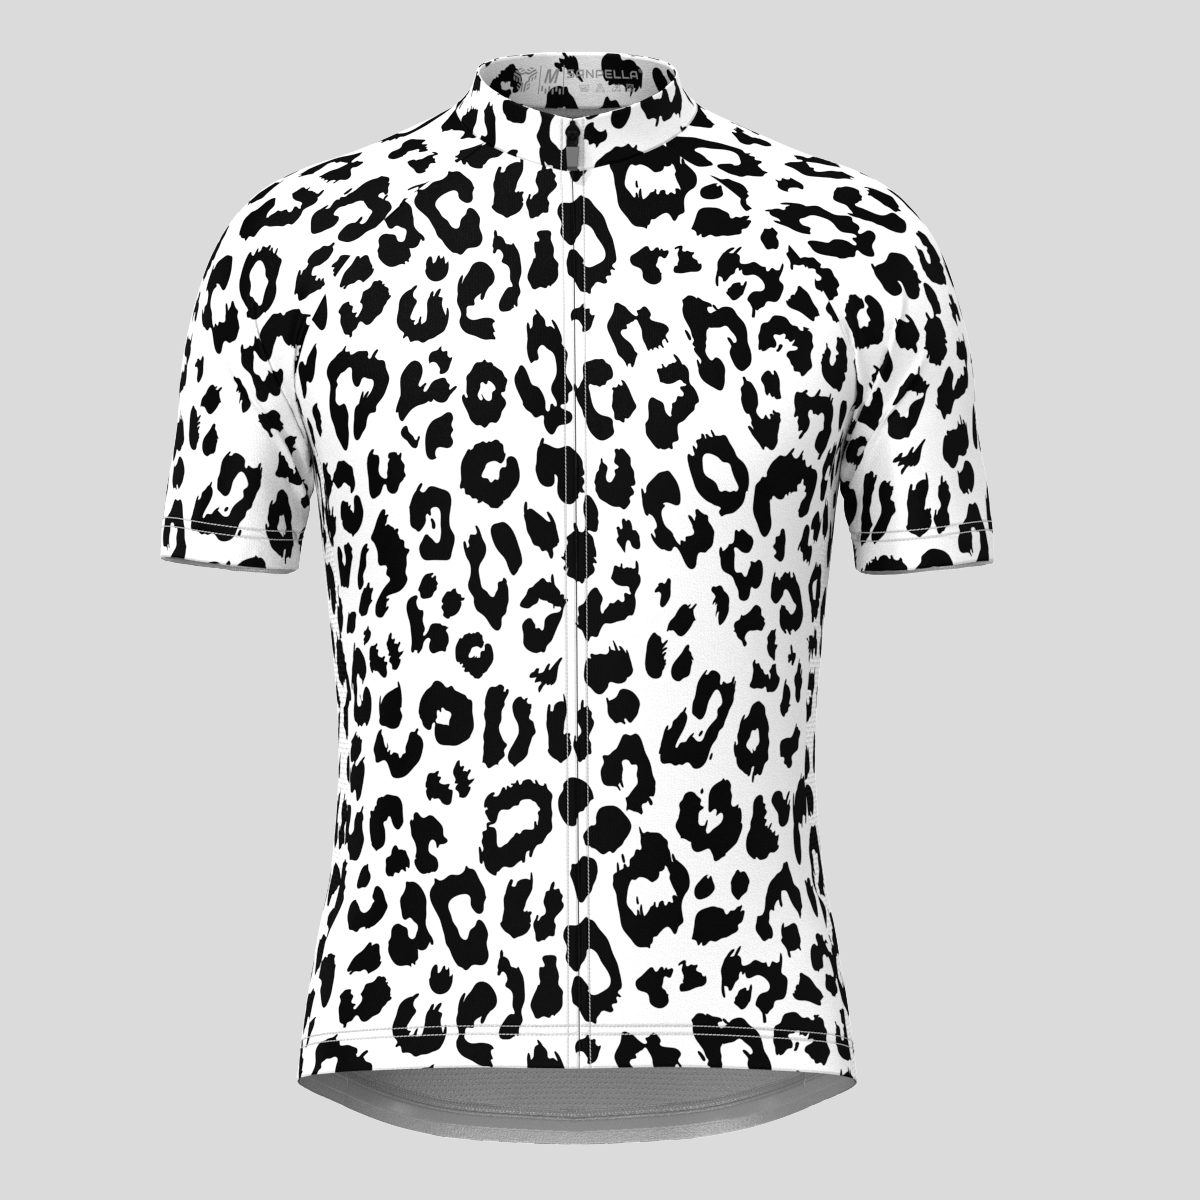 Leopard Spots Men's Cycling Jersey - Black/White